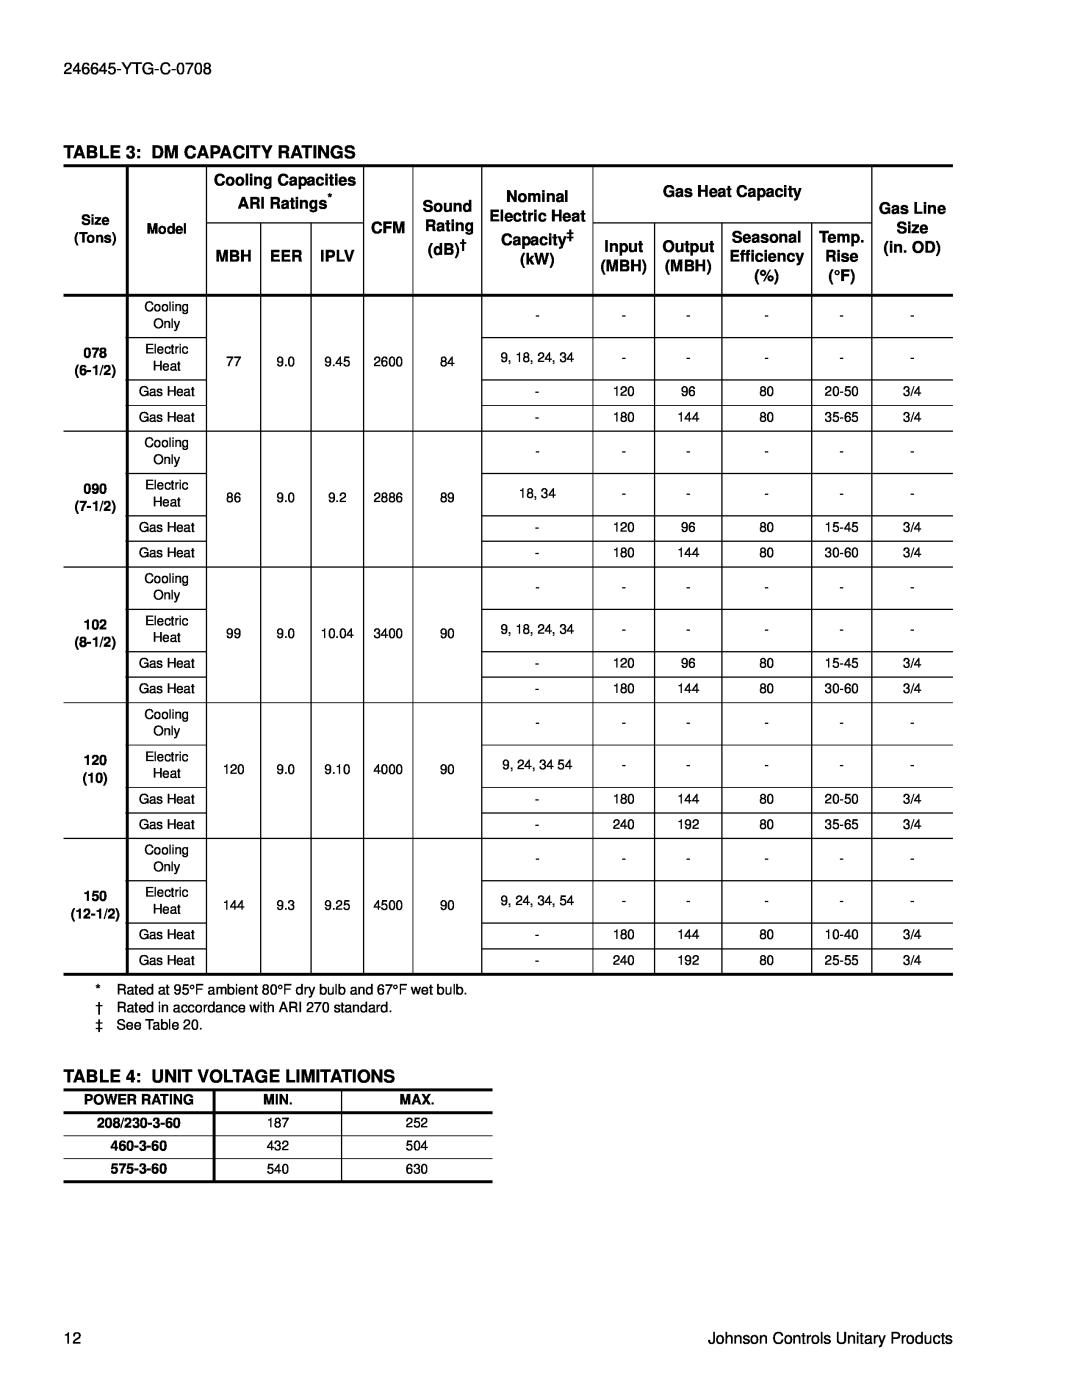 York DM 078 manual Dm Capacity Ratings, Unit Voltage Limitations 